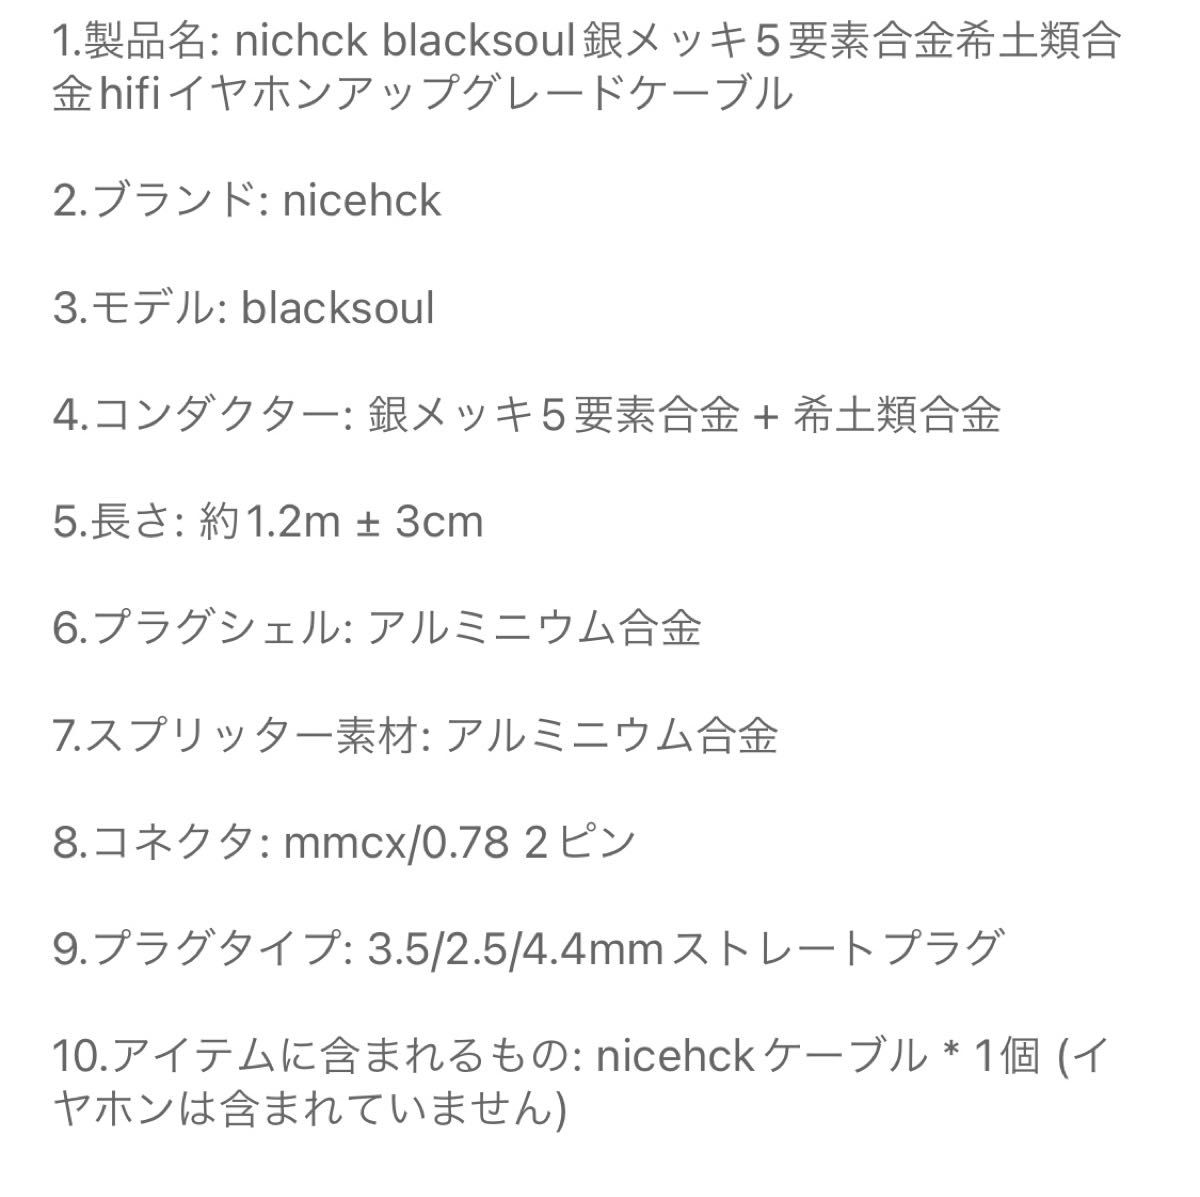 2PIN 4.4mm BlackSoul NICEHCK 銀メッキ五元素合金＋レアアース合金　リケーブル　イヤホンケーブル